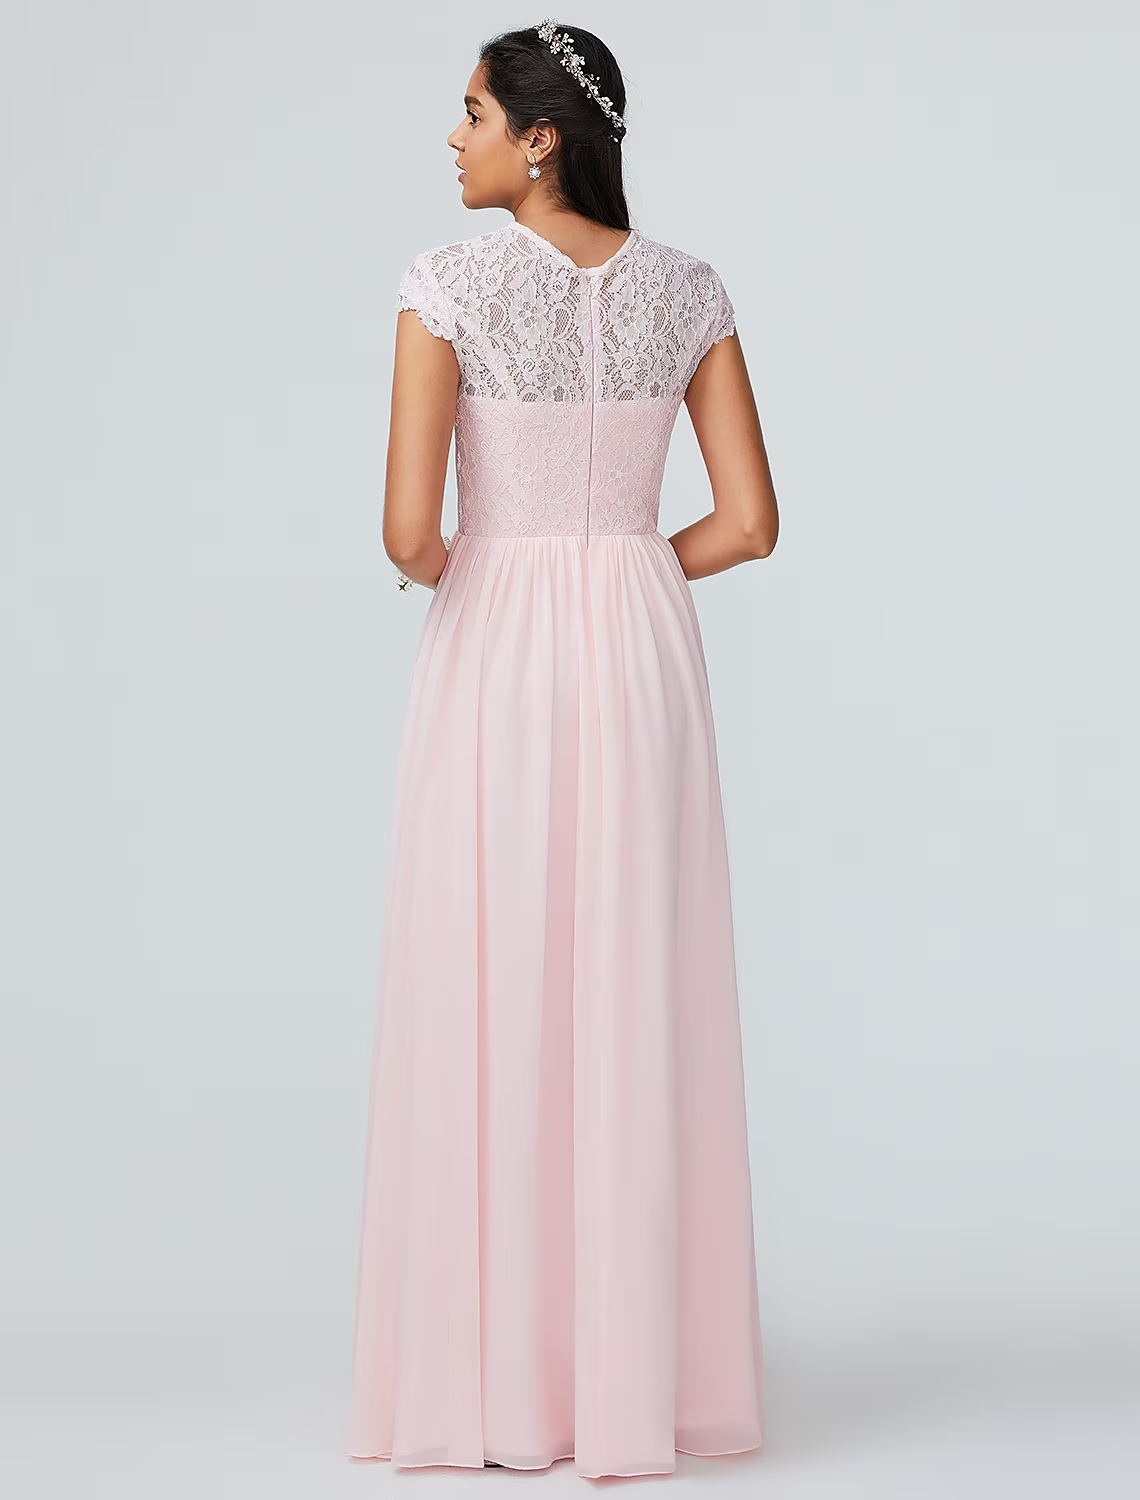 A-Line Bridesmaid Dress Jewel Neck Sleeveless Elegant Floor Length Chiffon with Lace